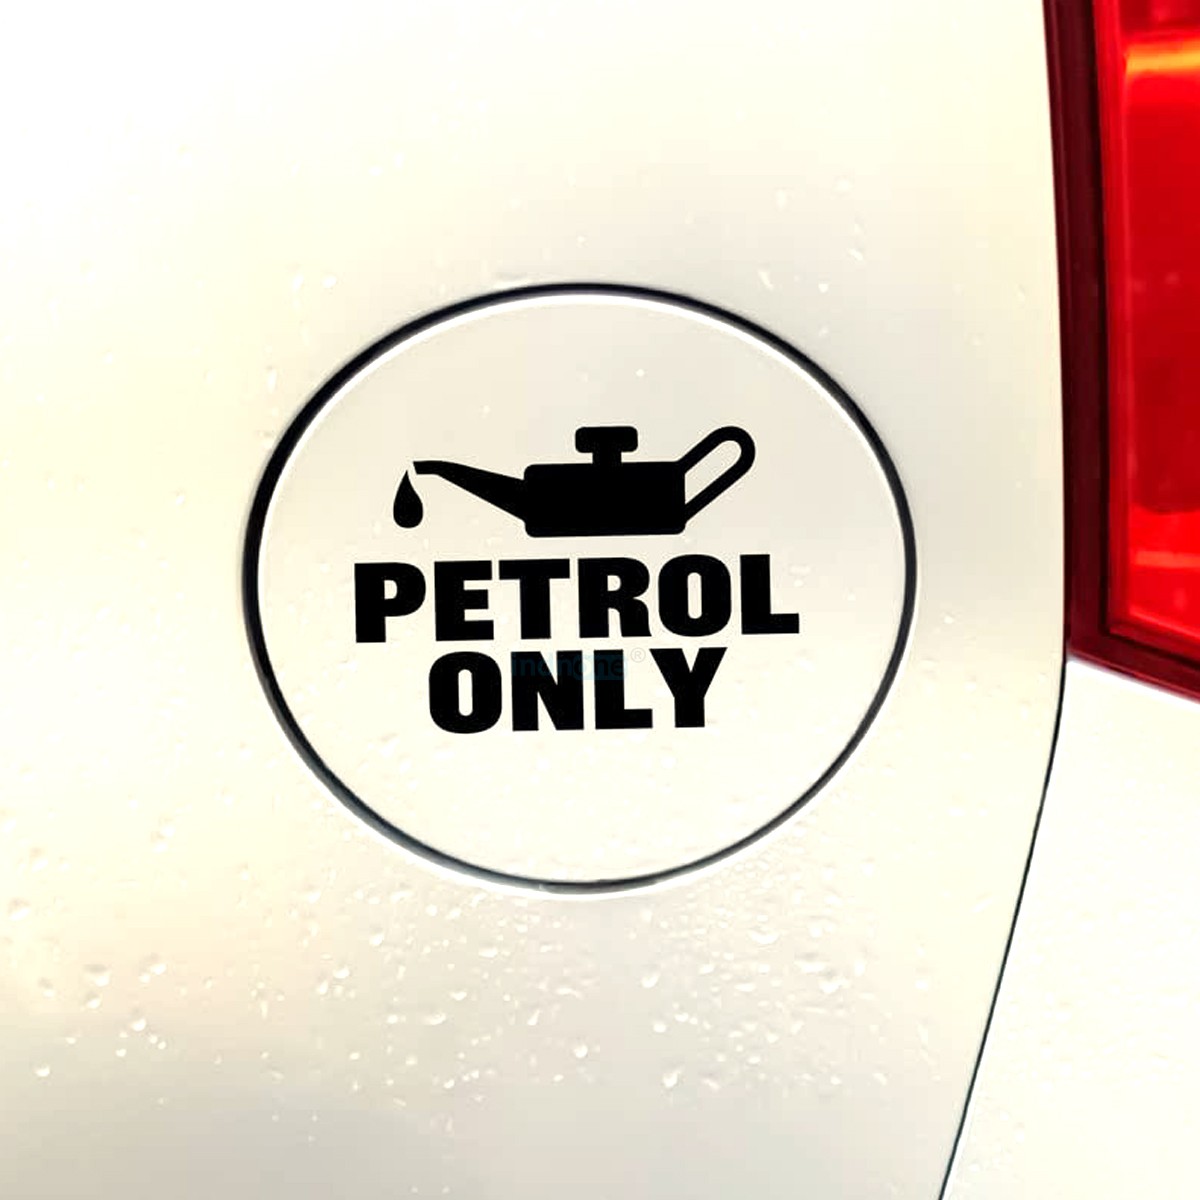 indnone® Petrol Jug Logo Sticker for Car. Car Sticker Stylish Fuel Lid | Black Color Standard Size